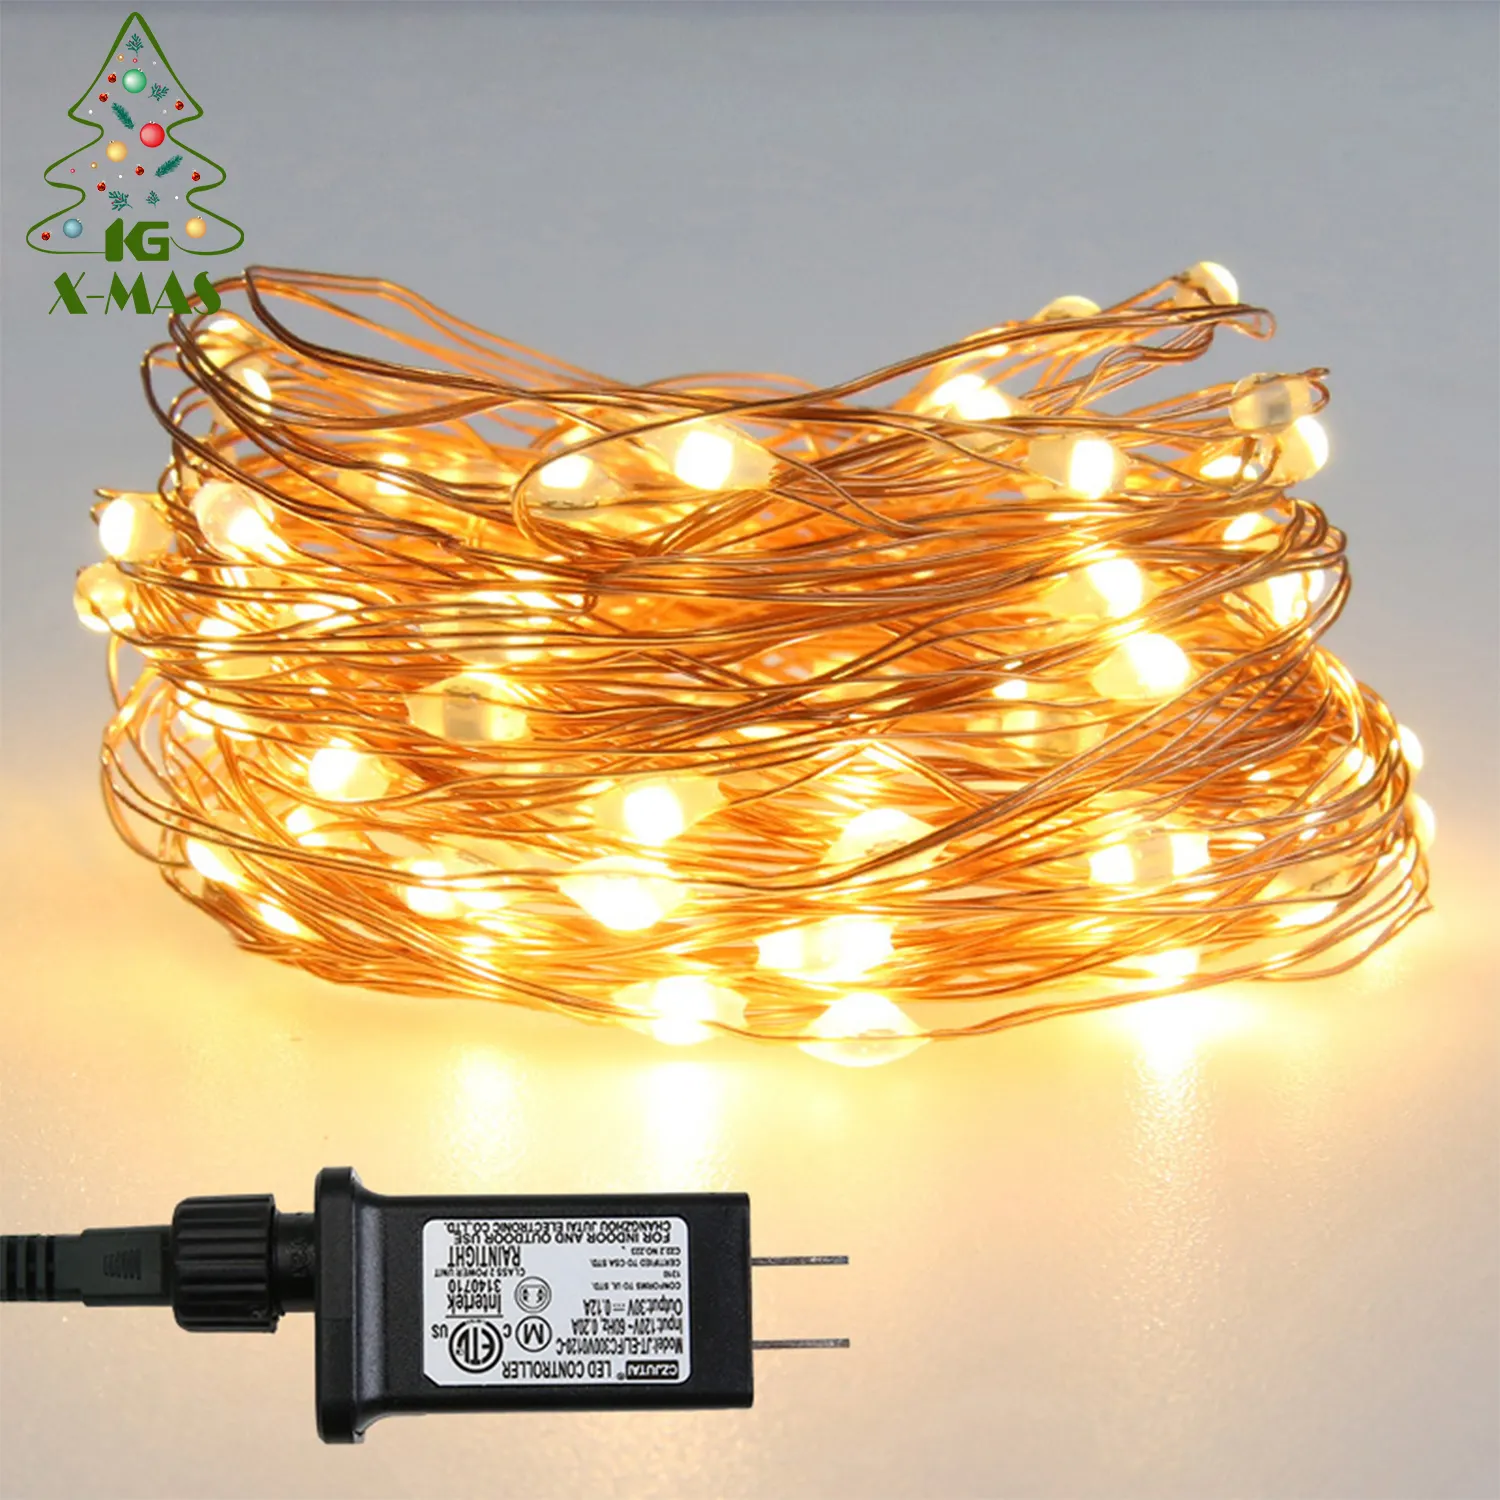 KG Xmas luces de navidad noel 공장 도매 구리 와이어 8 플래시 모드 장식 요정 빛 방수 크리스마스 빛